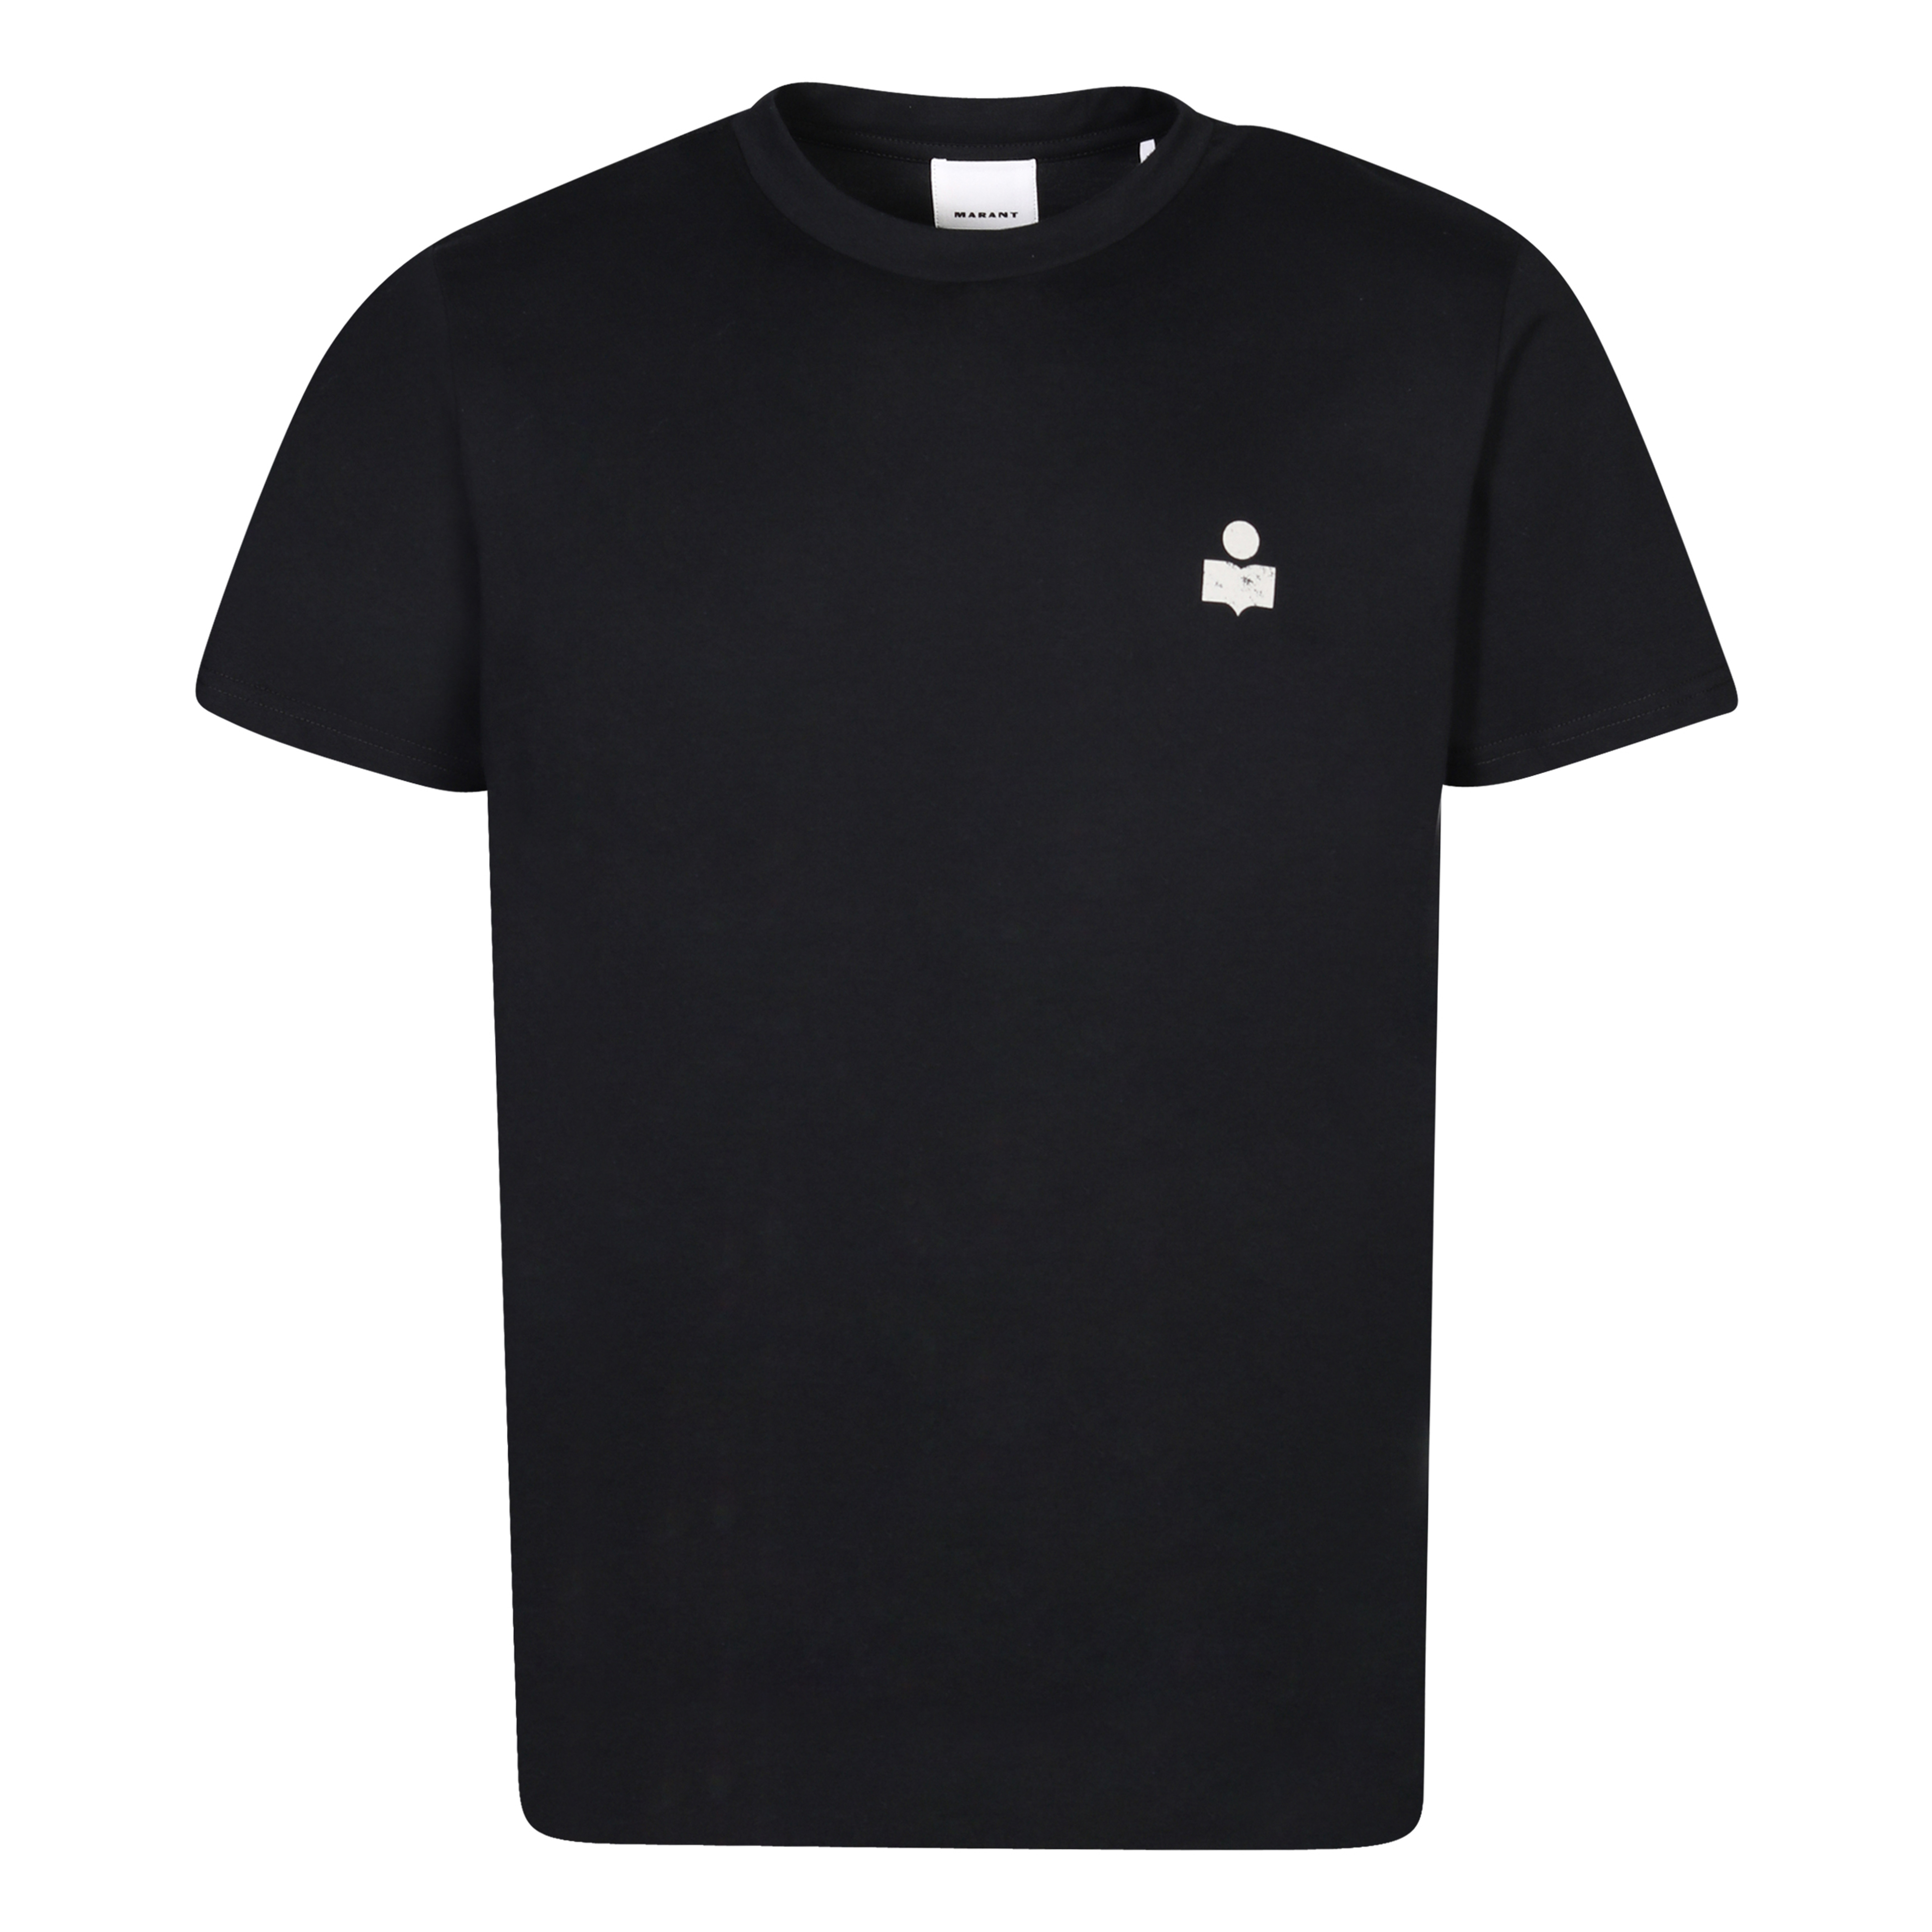 Isabel Marant Zafferh T-Shirt in Black/Ecru